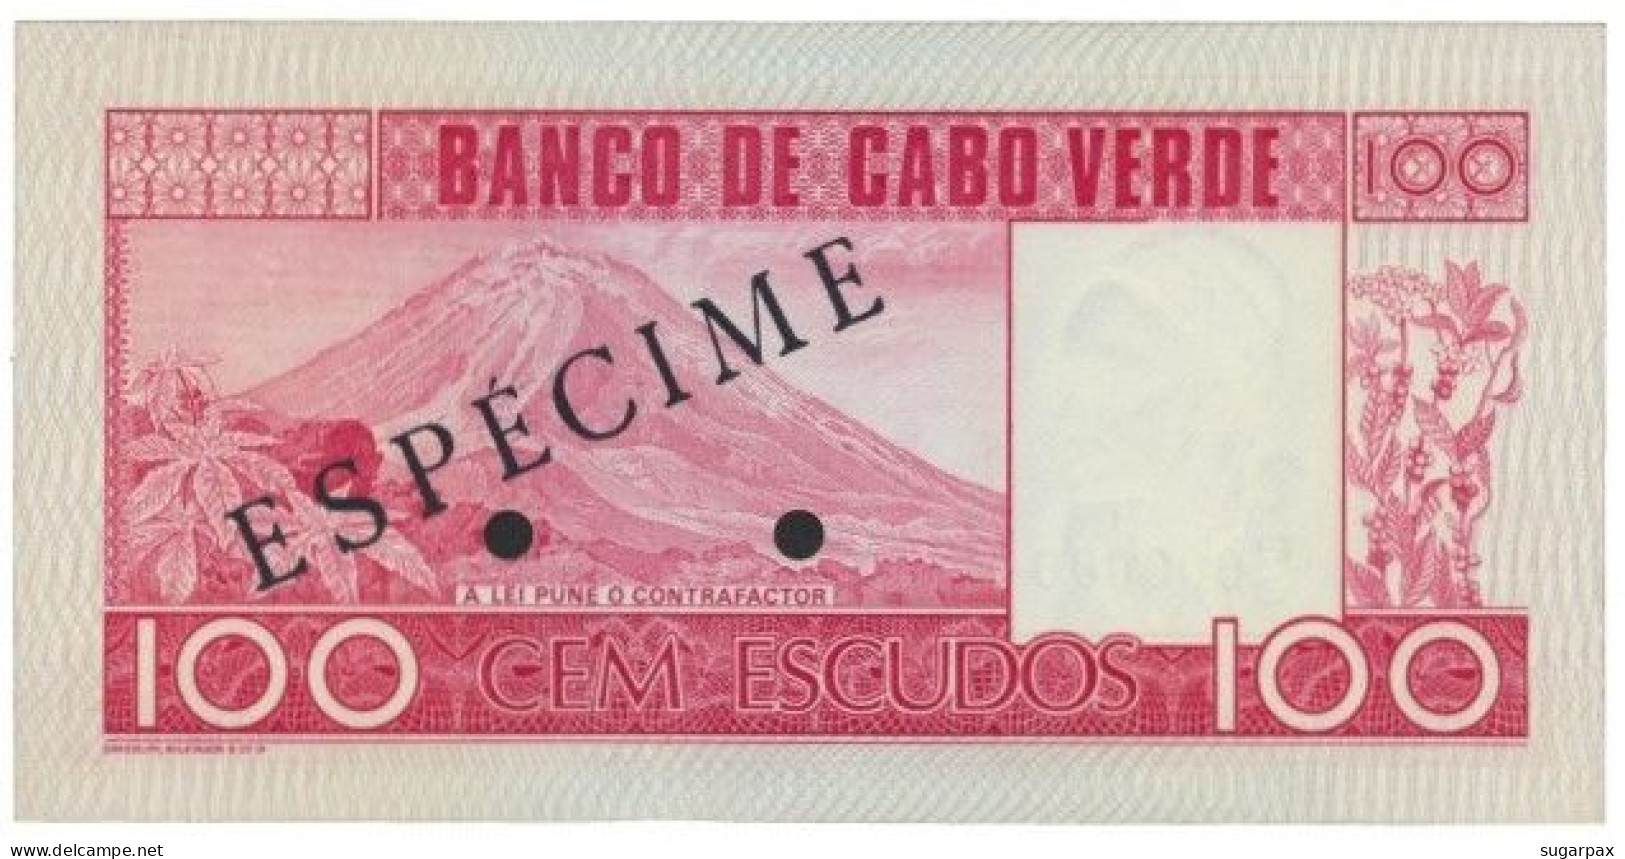 CAPE VERDE - 100 ESCUDOS - 20.01.1977 - Pick 54.s2 - Unc. - ESPÉCIME In BLACK - Cabo Verde